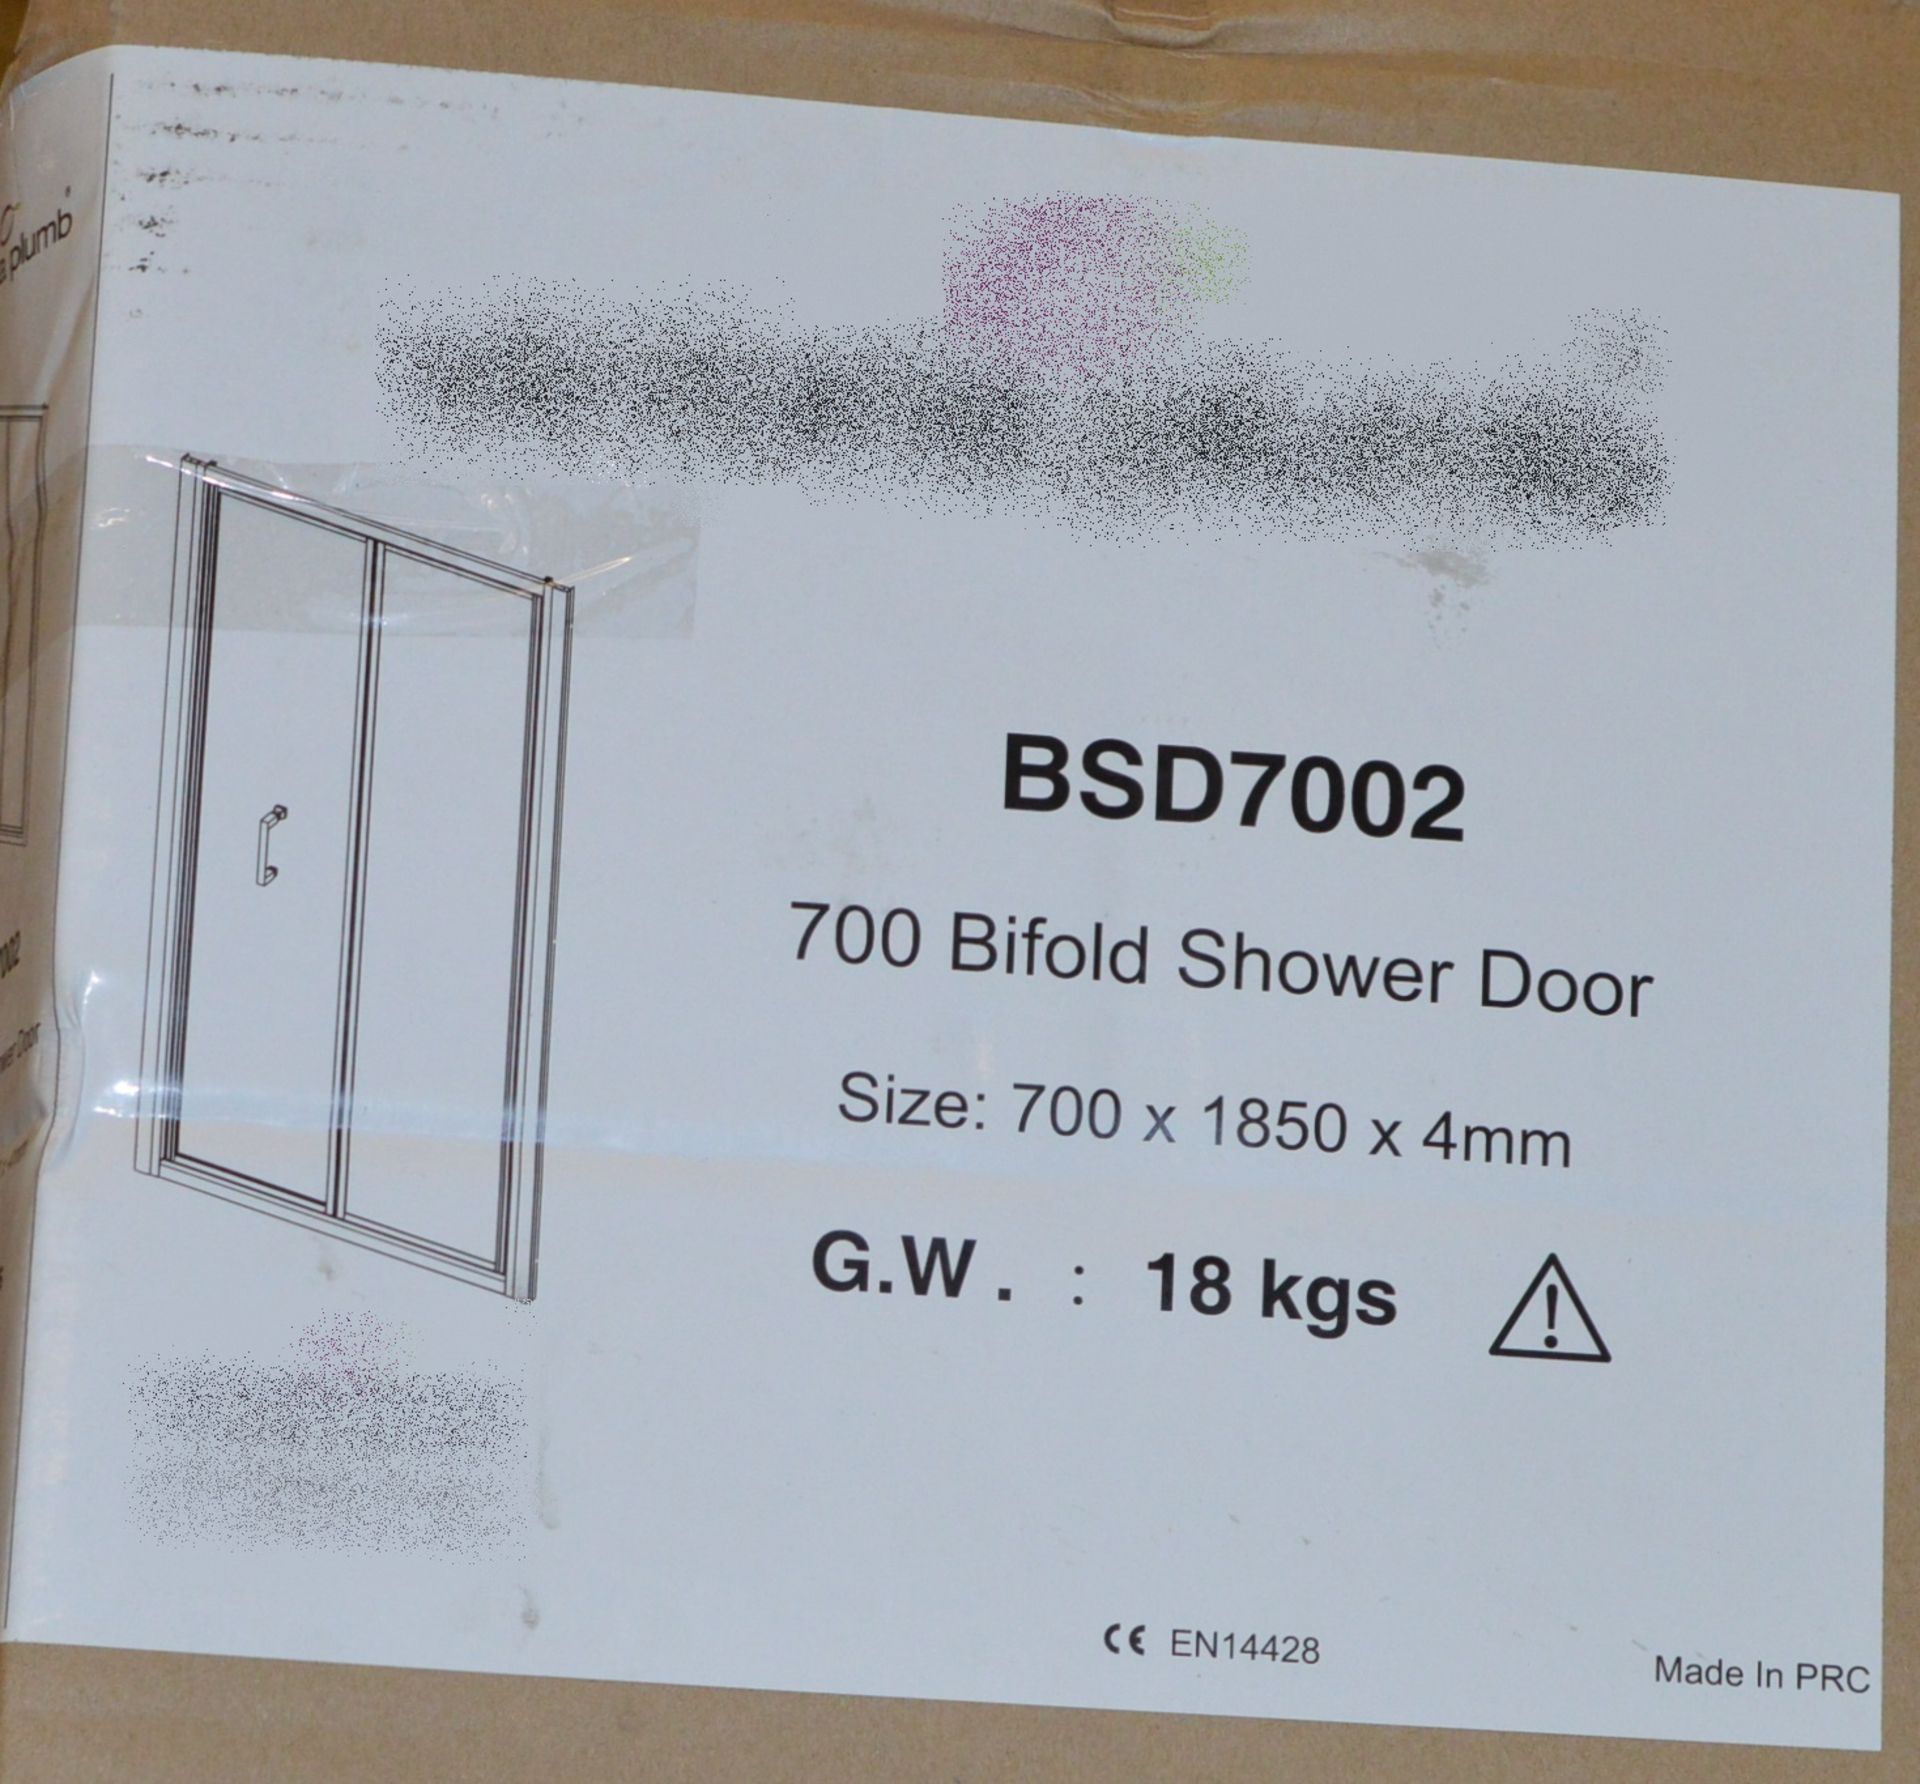 1 x 700mm Bifold Shower Door - Unused Stock - CL190 - Ref BR110 - 700x1850x4mm - Location: Bolton - Image 2 of 4